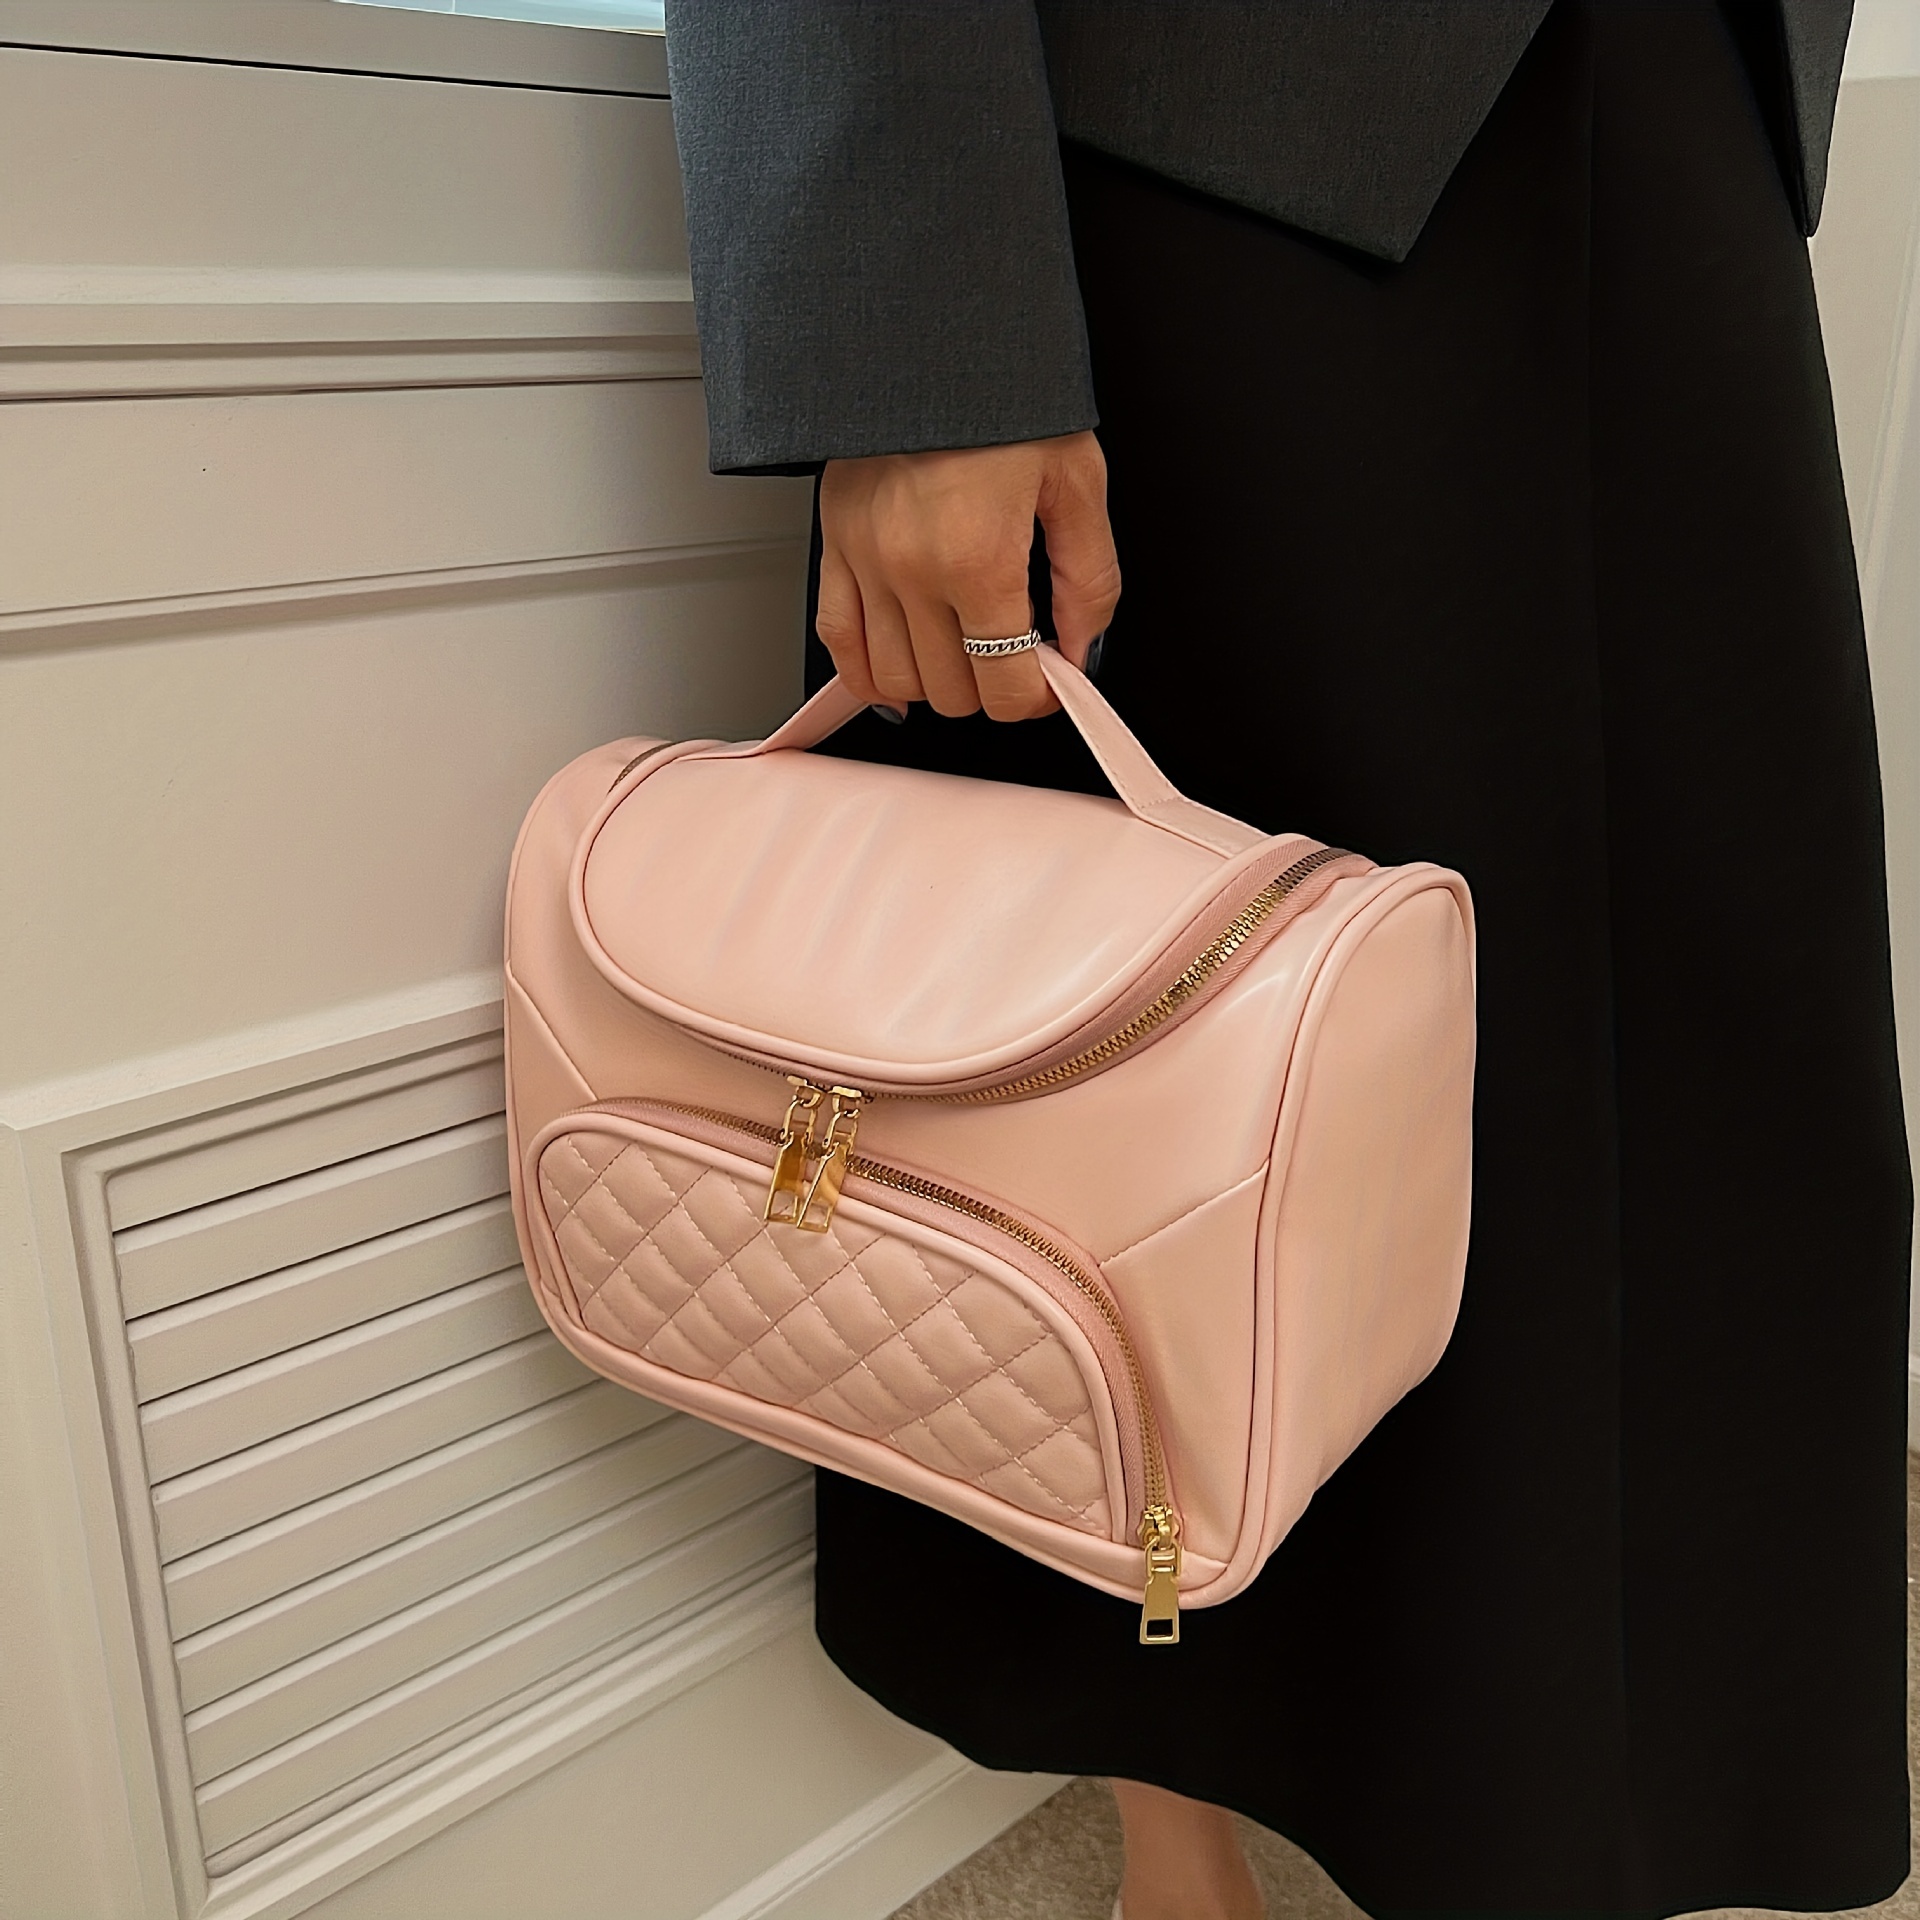 Large Capacity Stylish Leather Cosmetic Bag Portable Women Travel